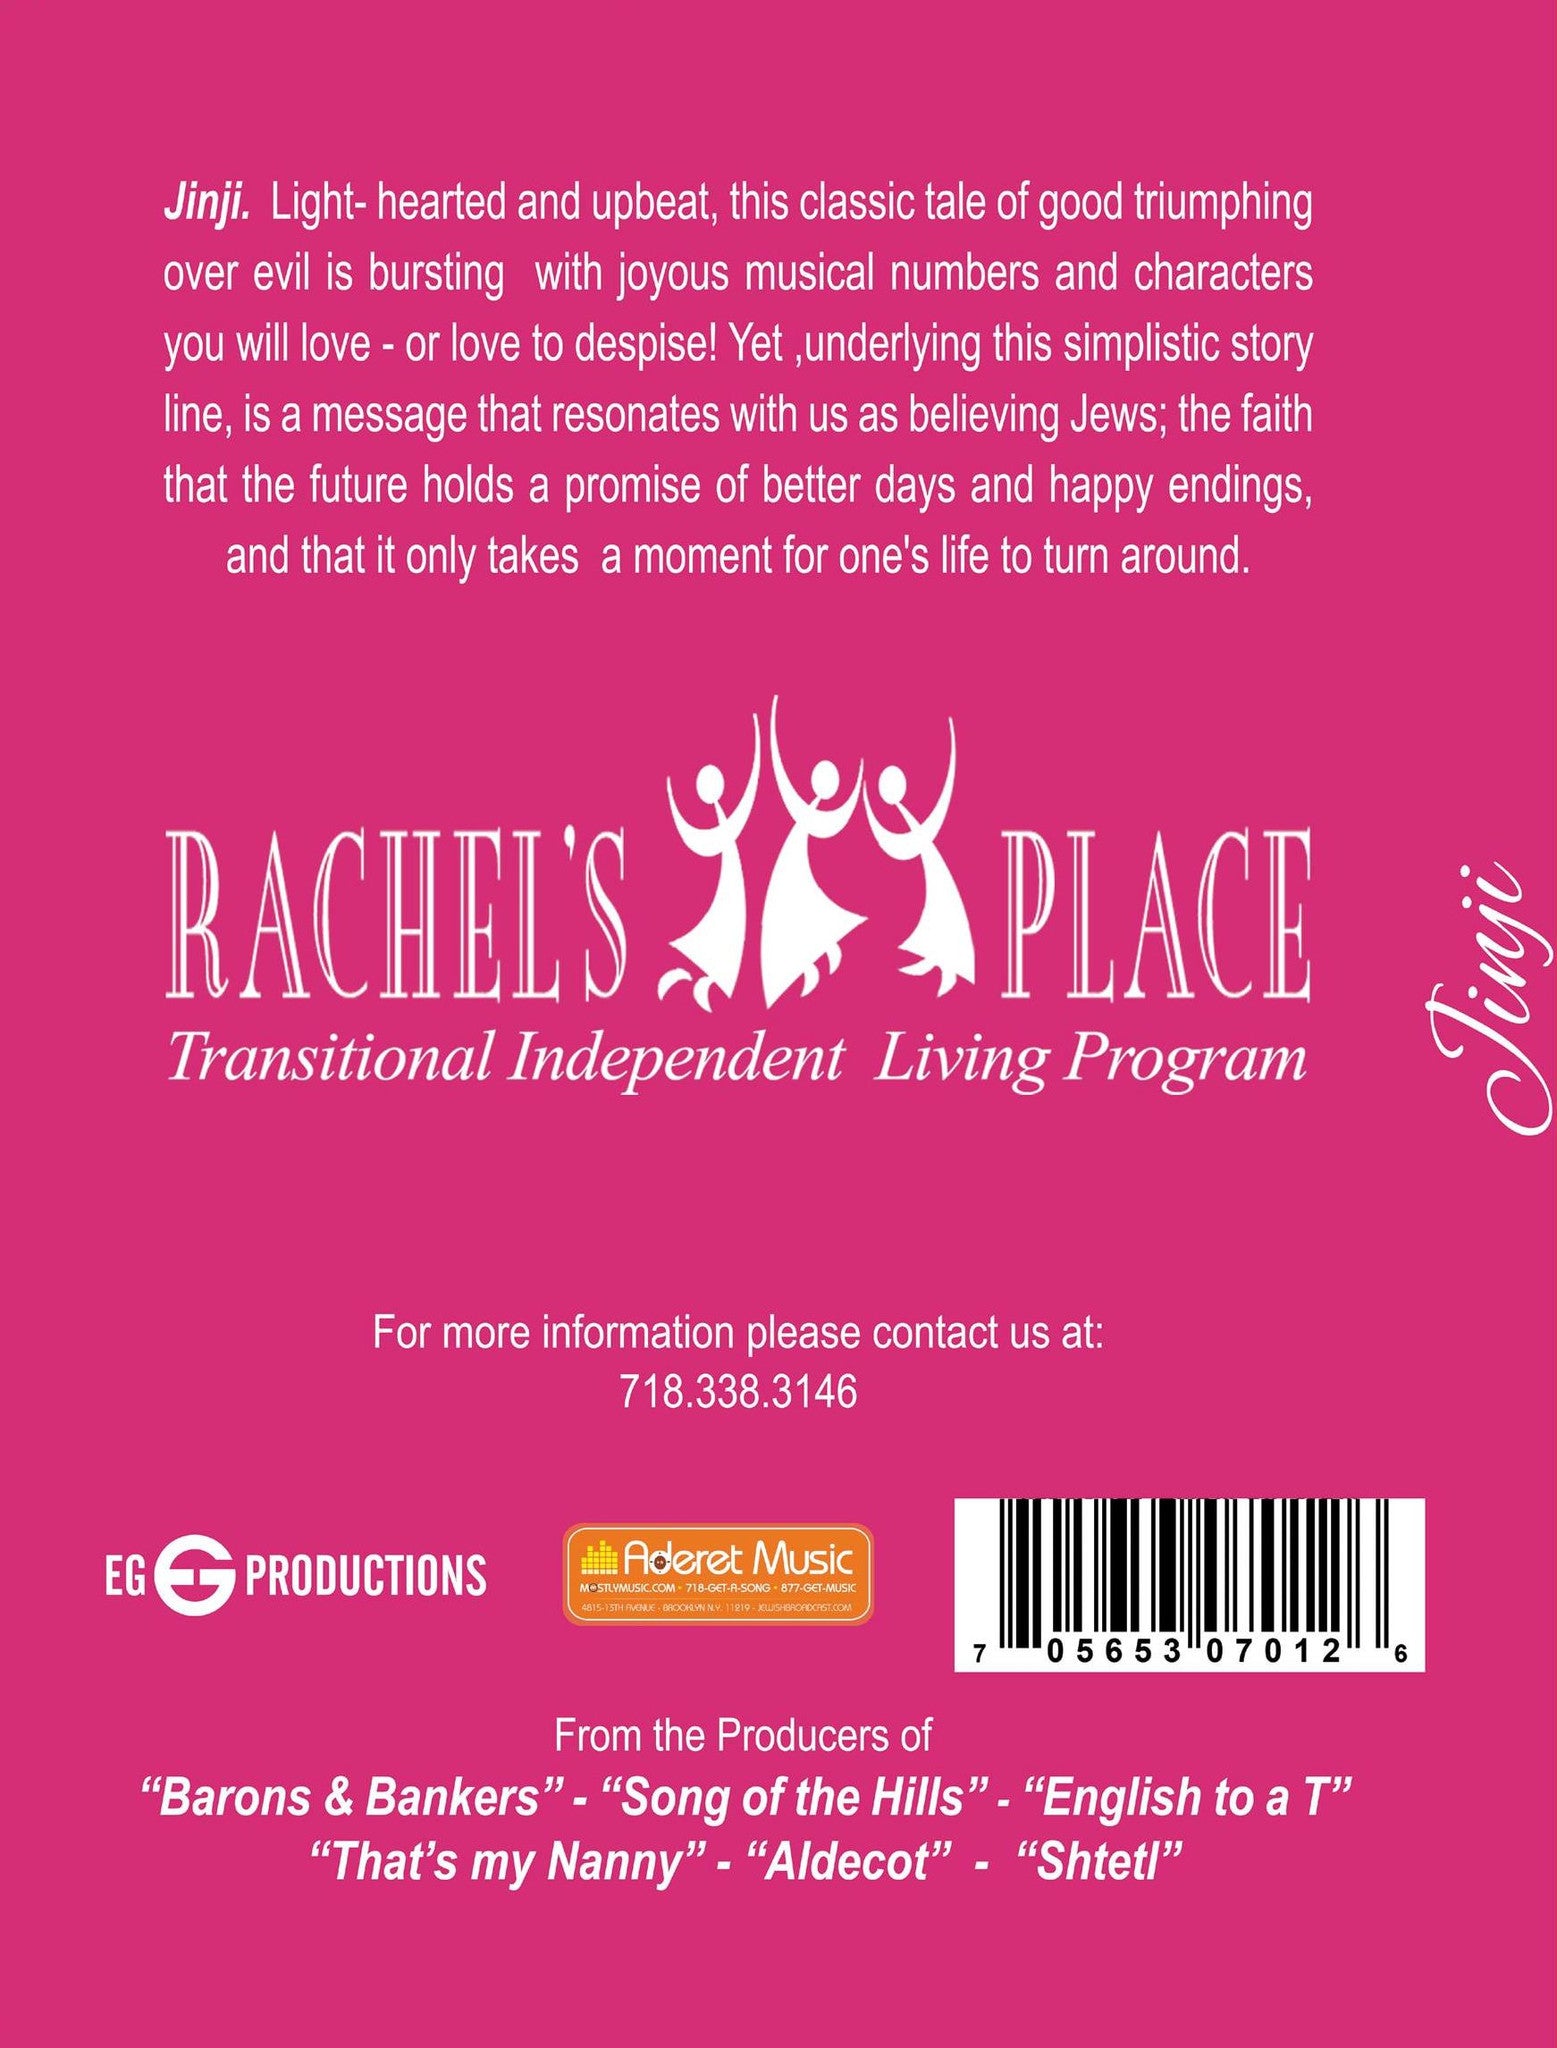 Rachels Place - Jinji (Video)